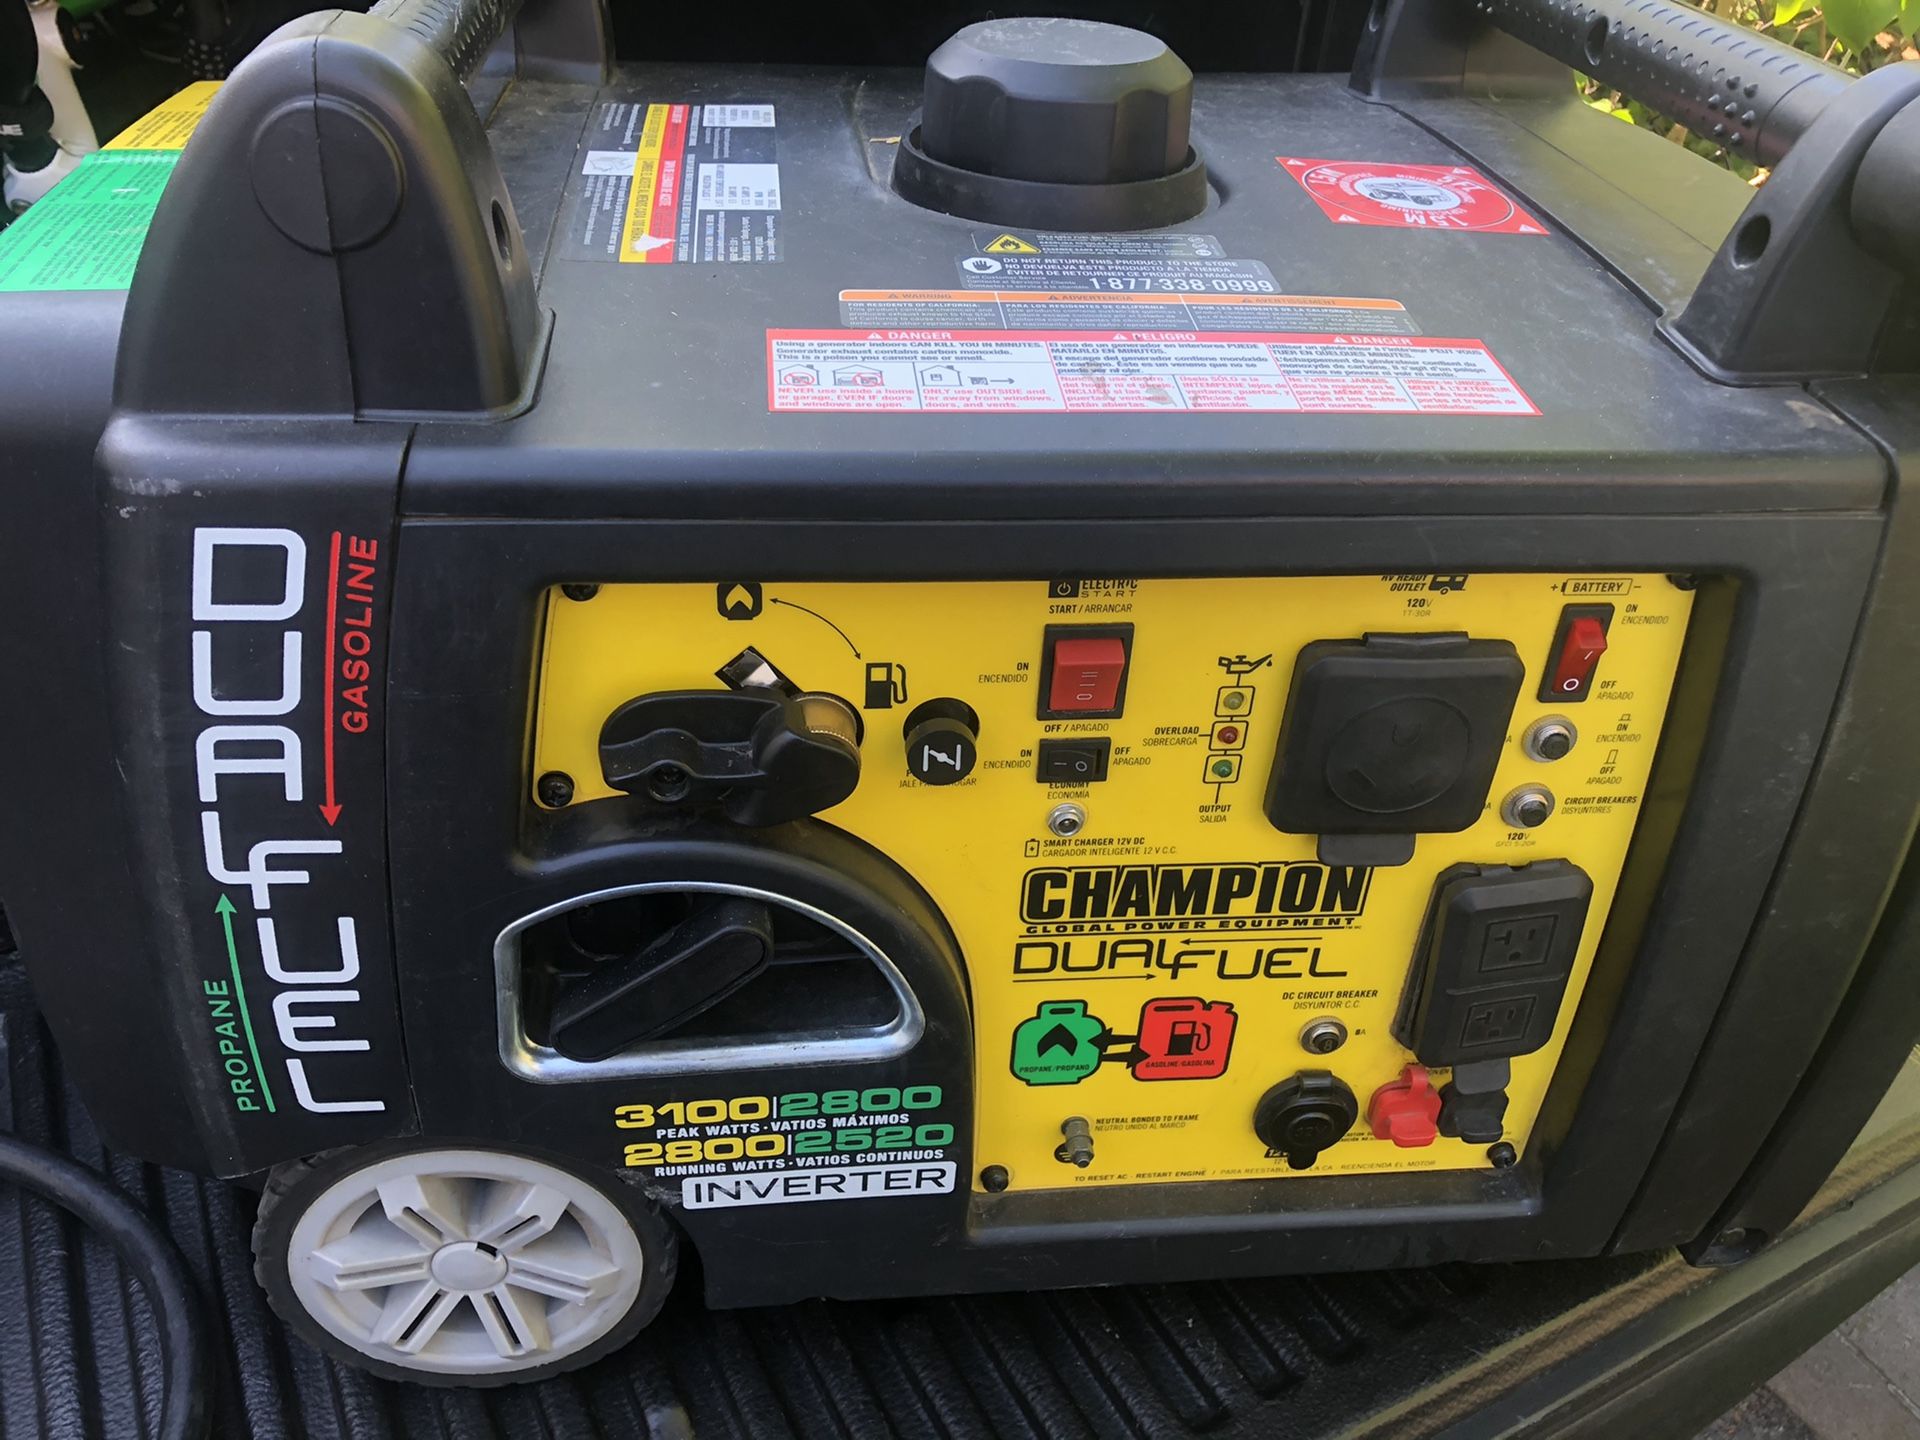 Champion dual fuel Generator